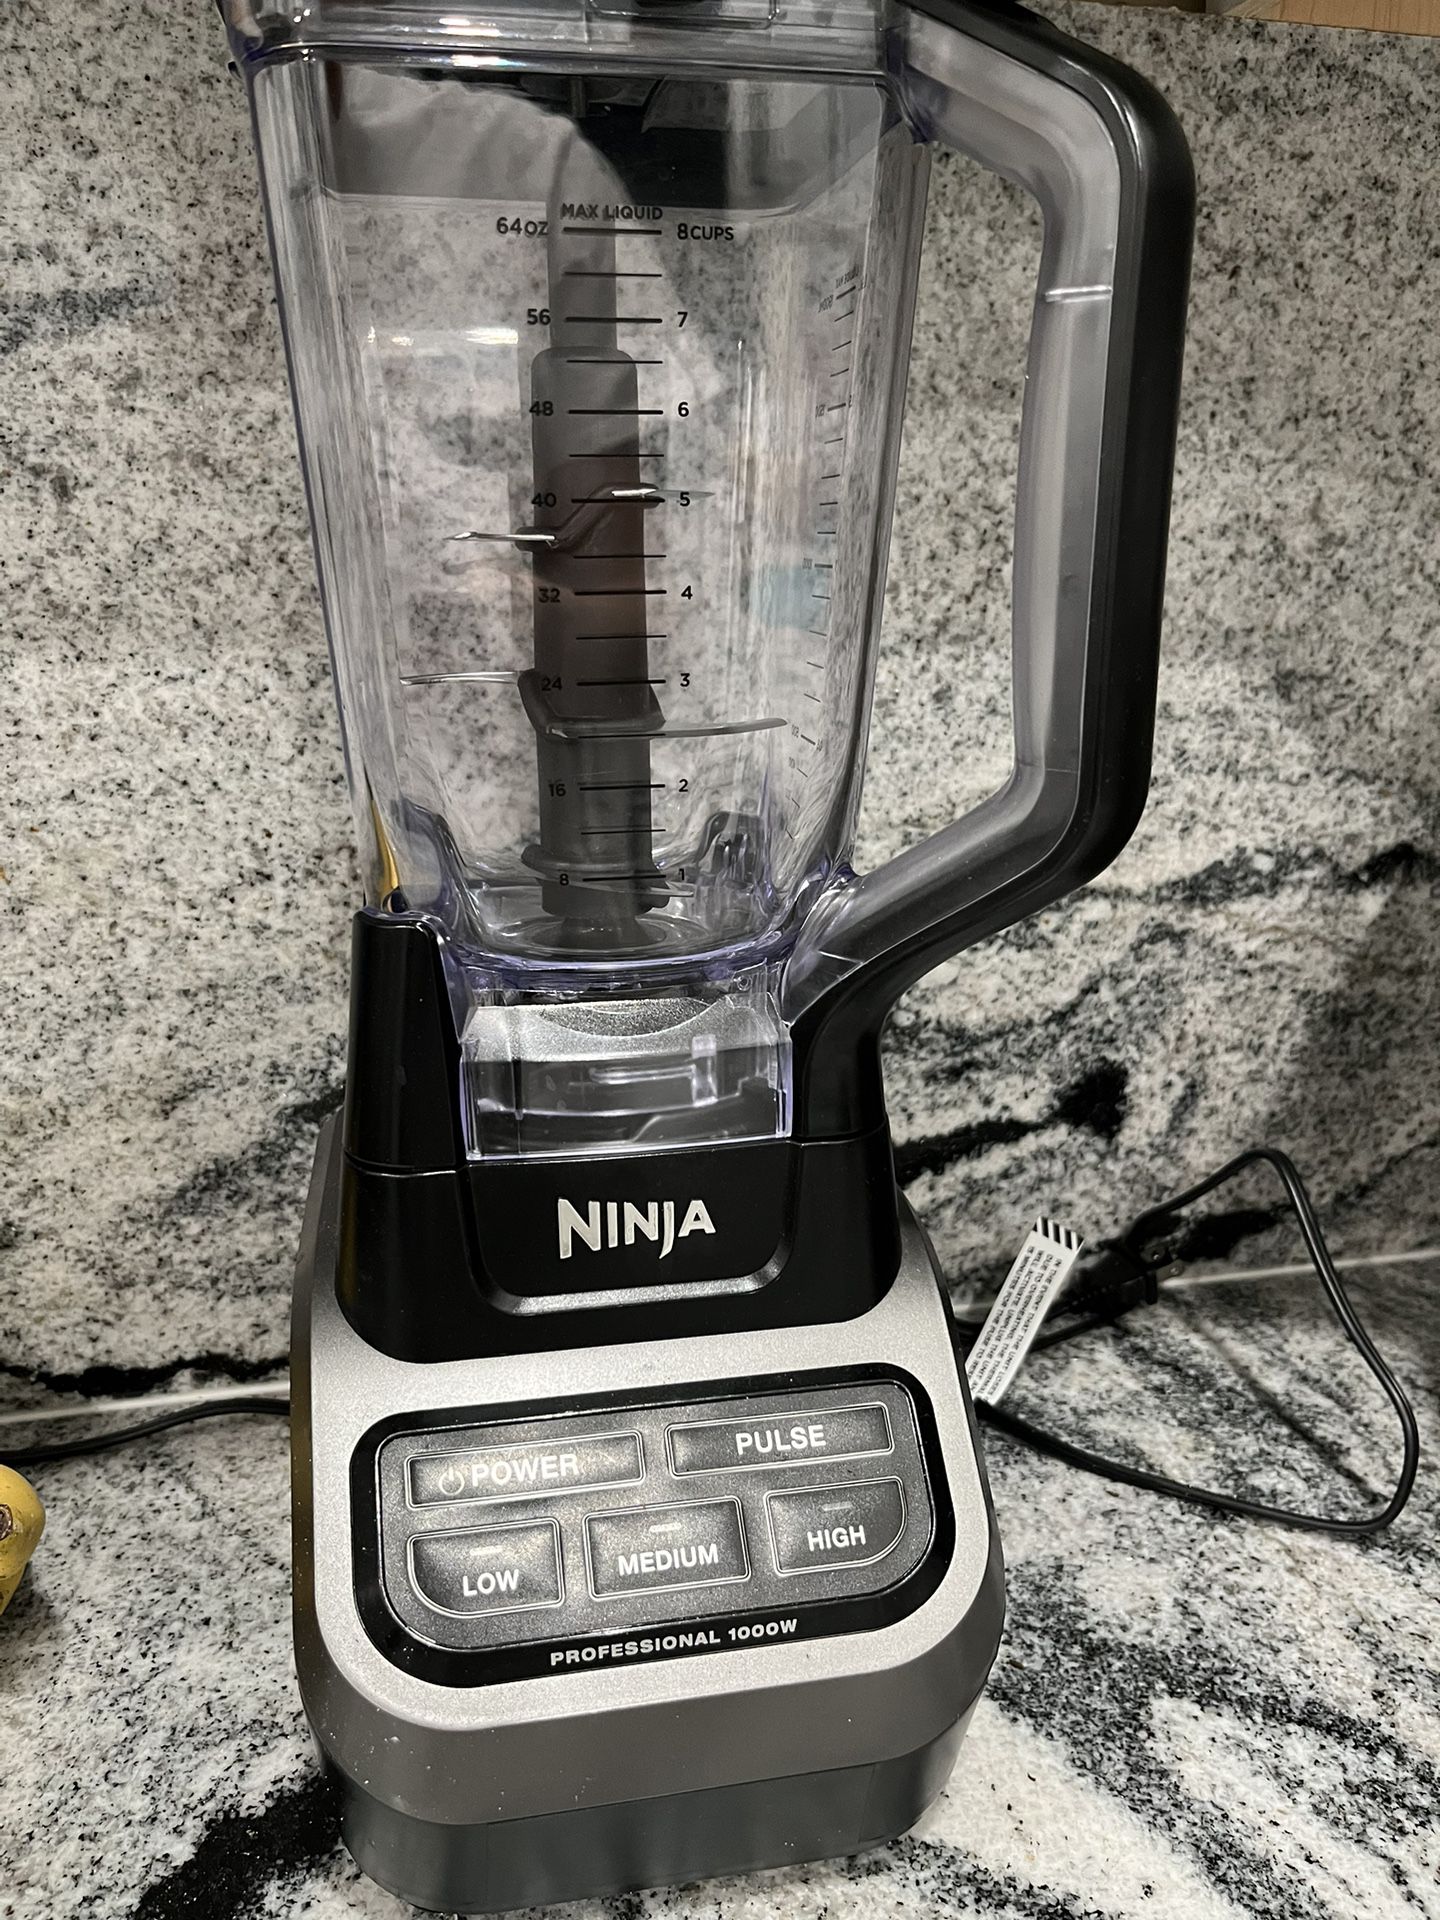 Ninja BL610 Professional 72 Oz Countertop Blender with 1000-Watt